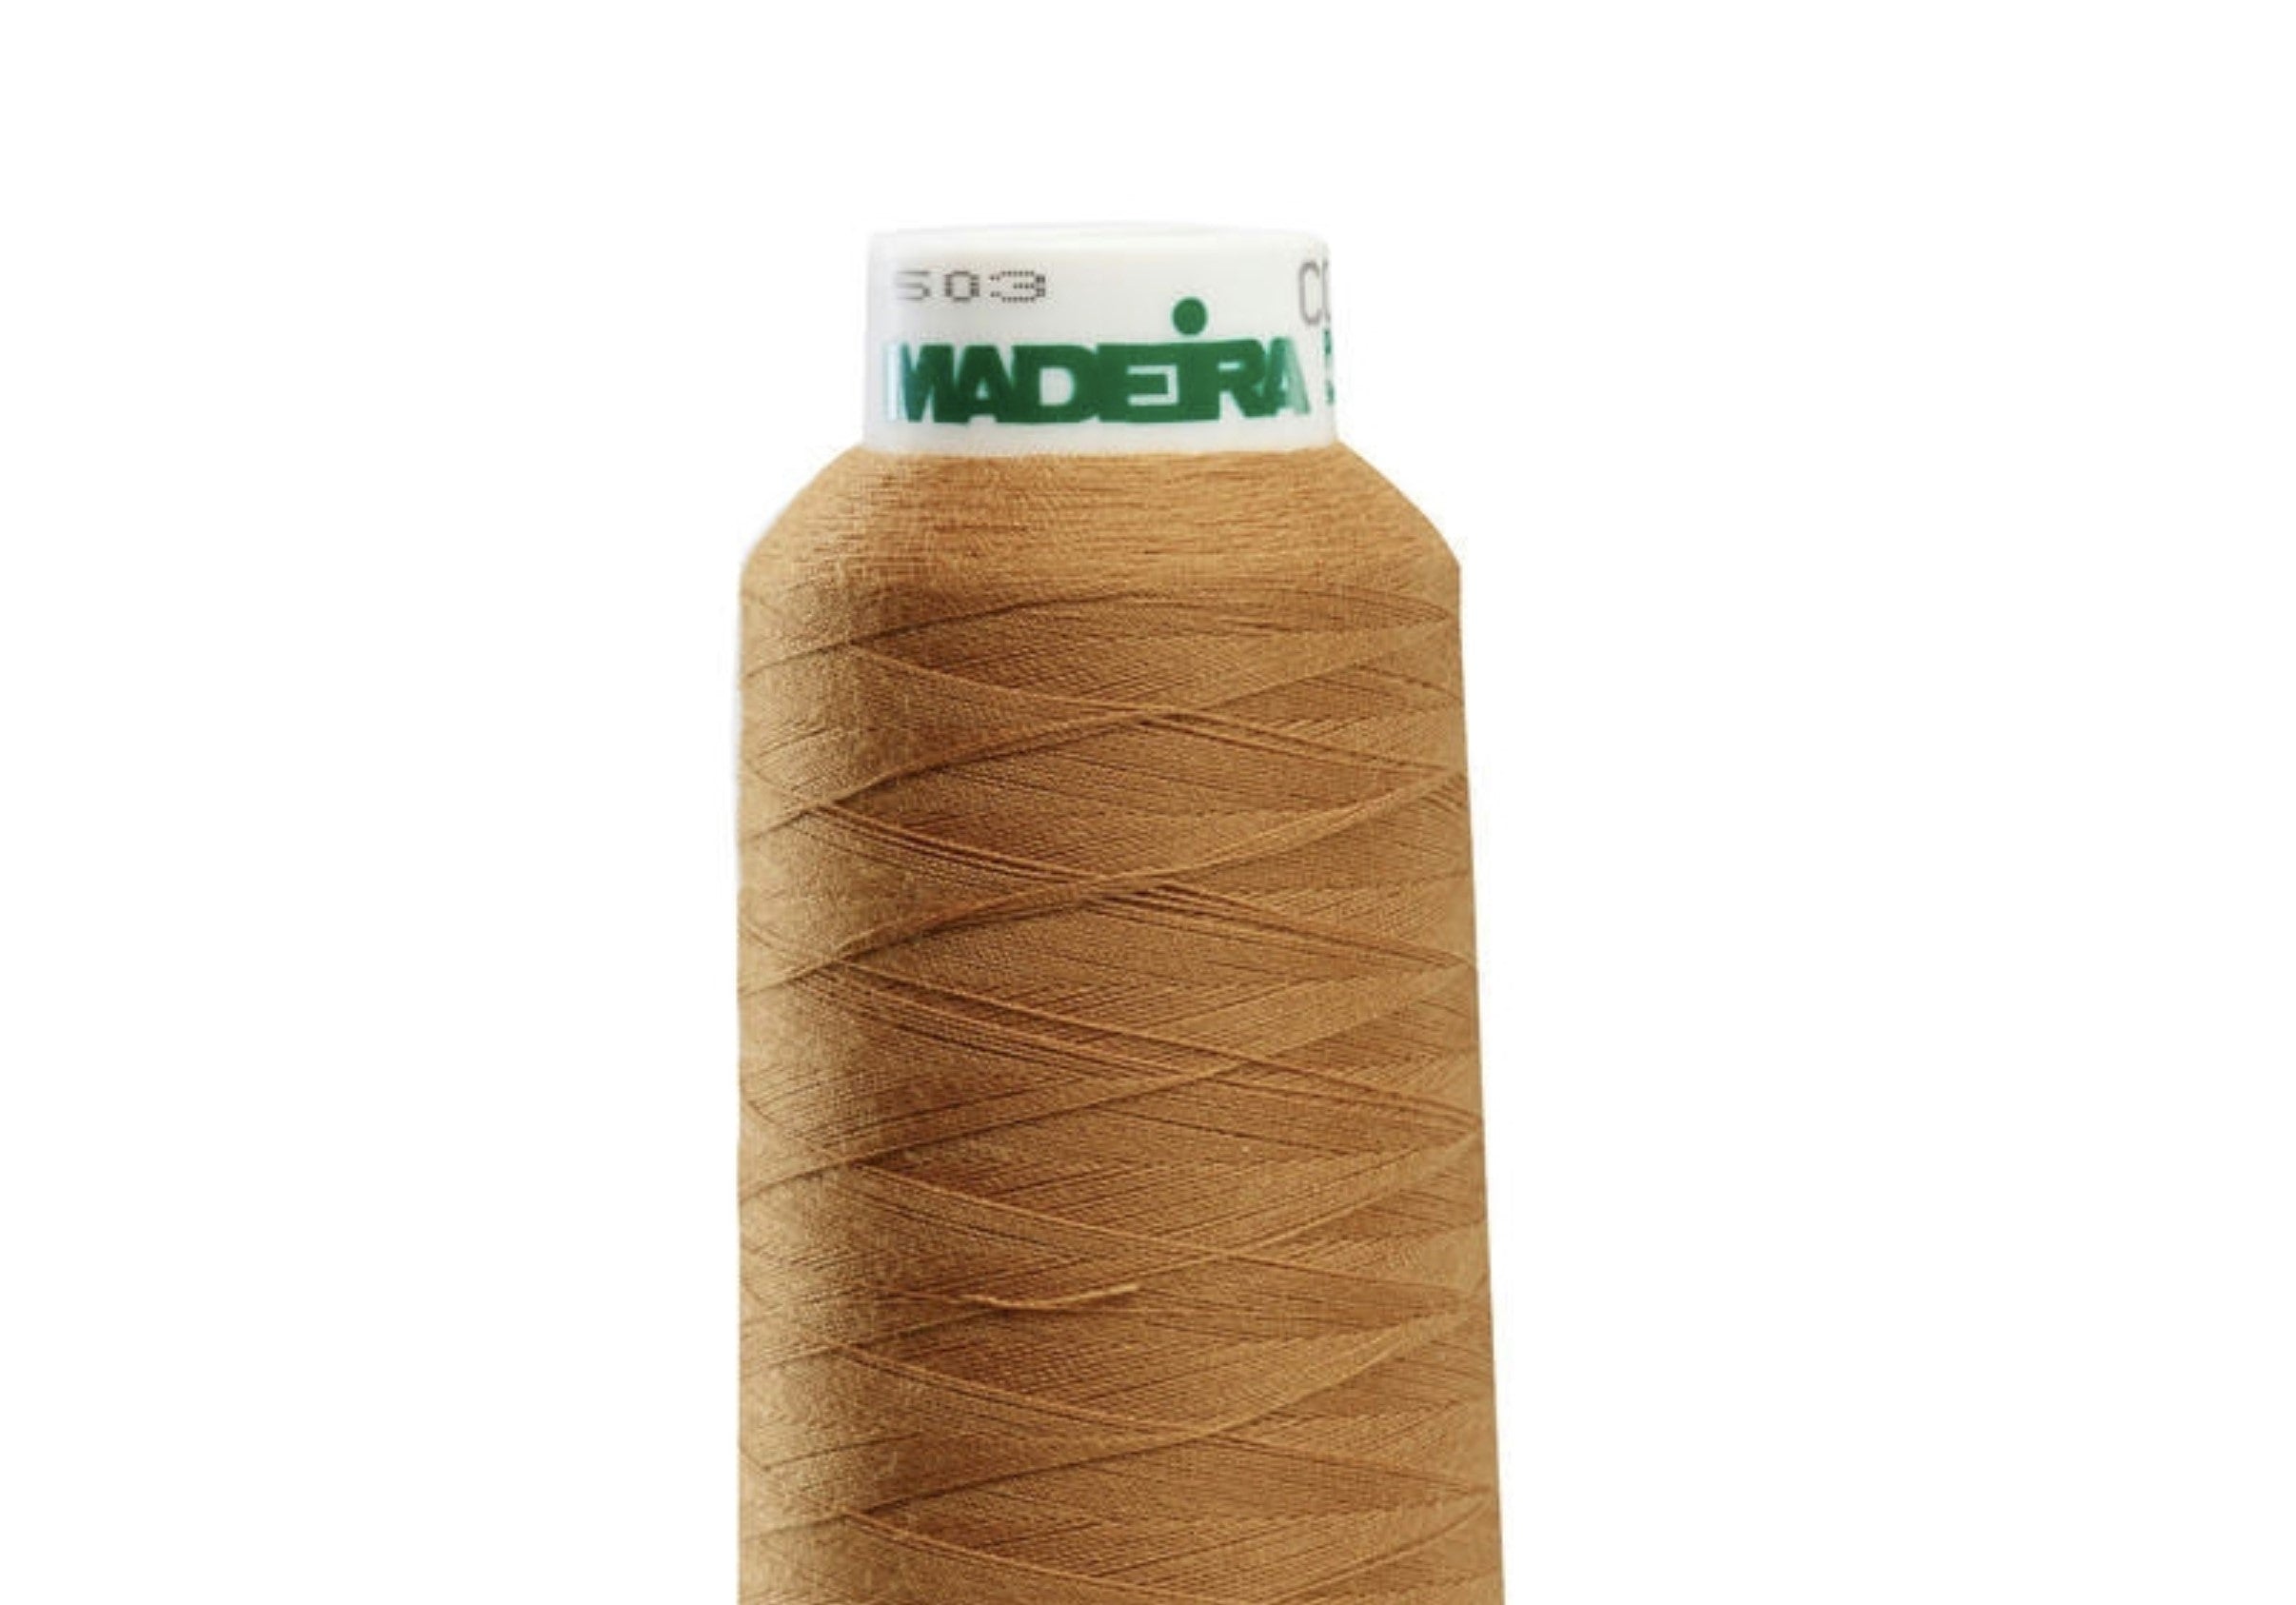 Denim Gold Color, Aerolock Premium Serger Thread, Ref. 8550 by Madeira®